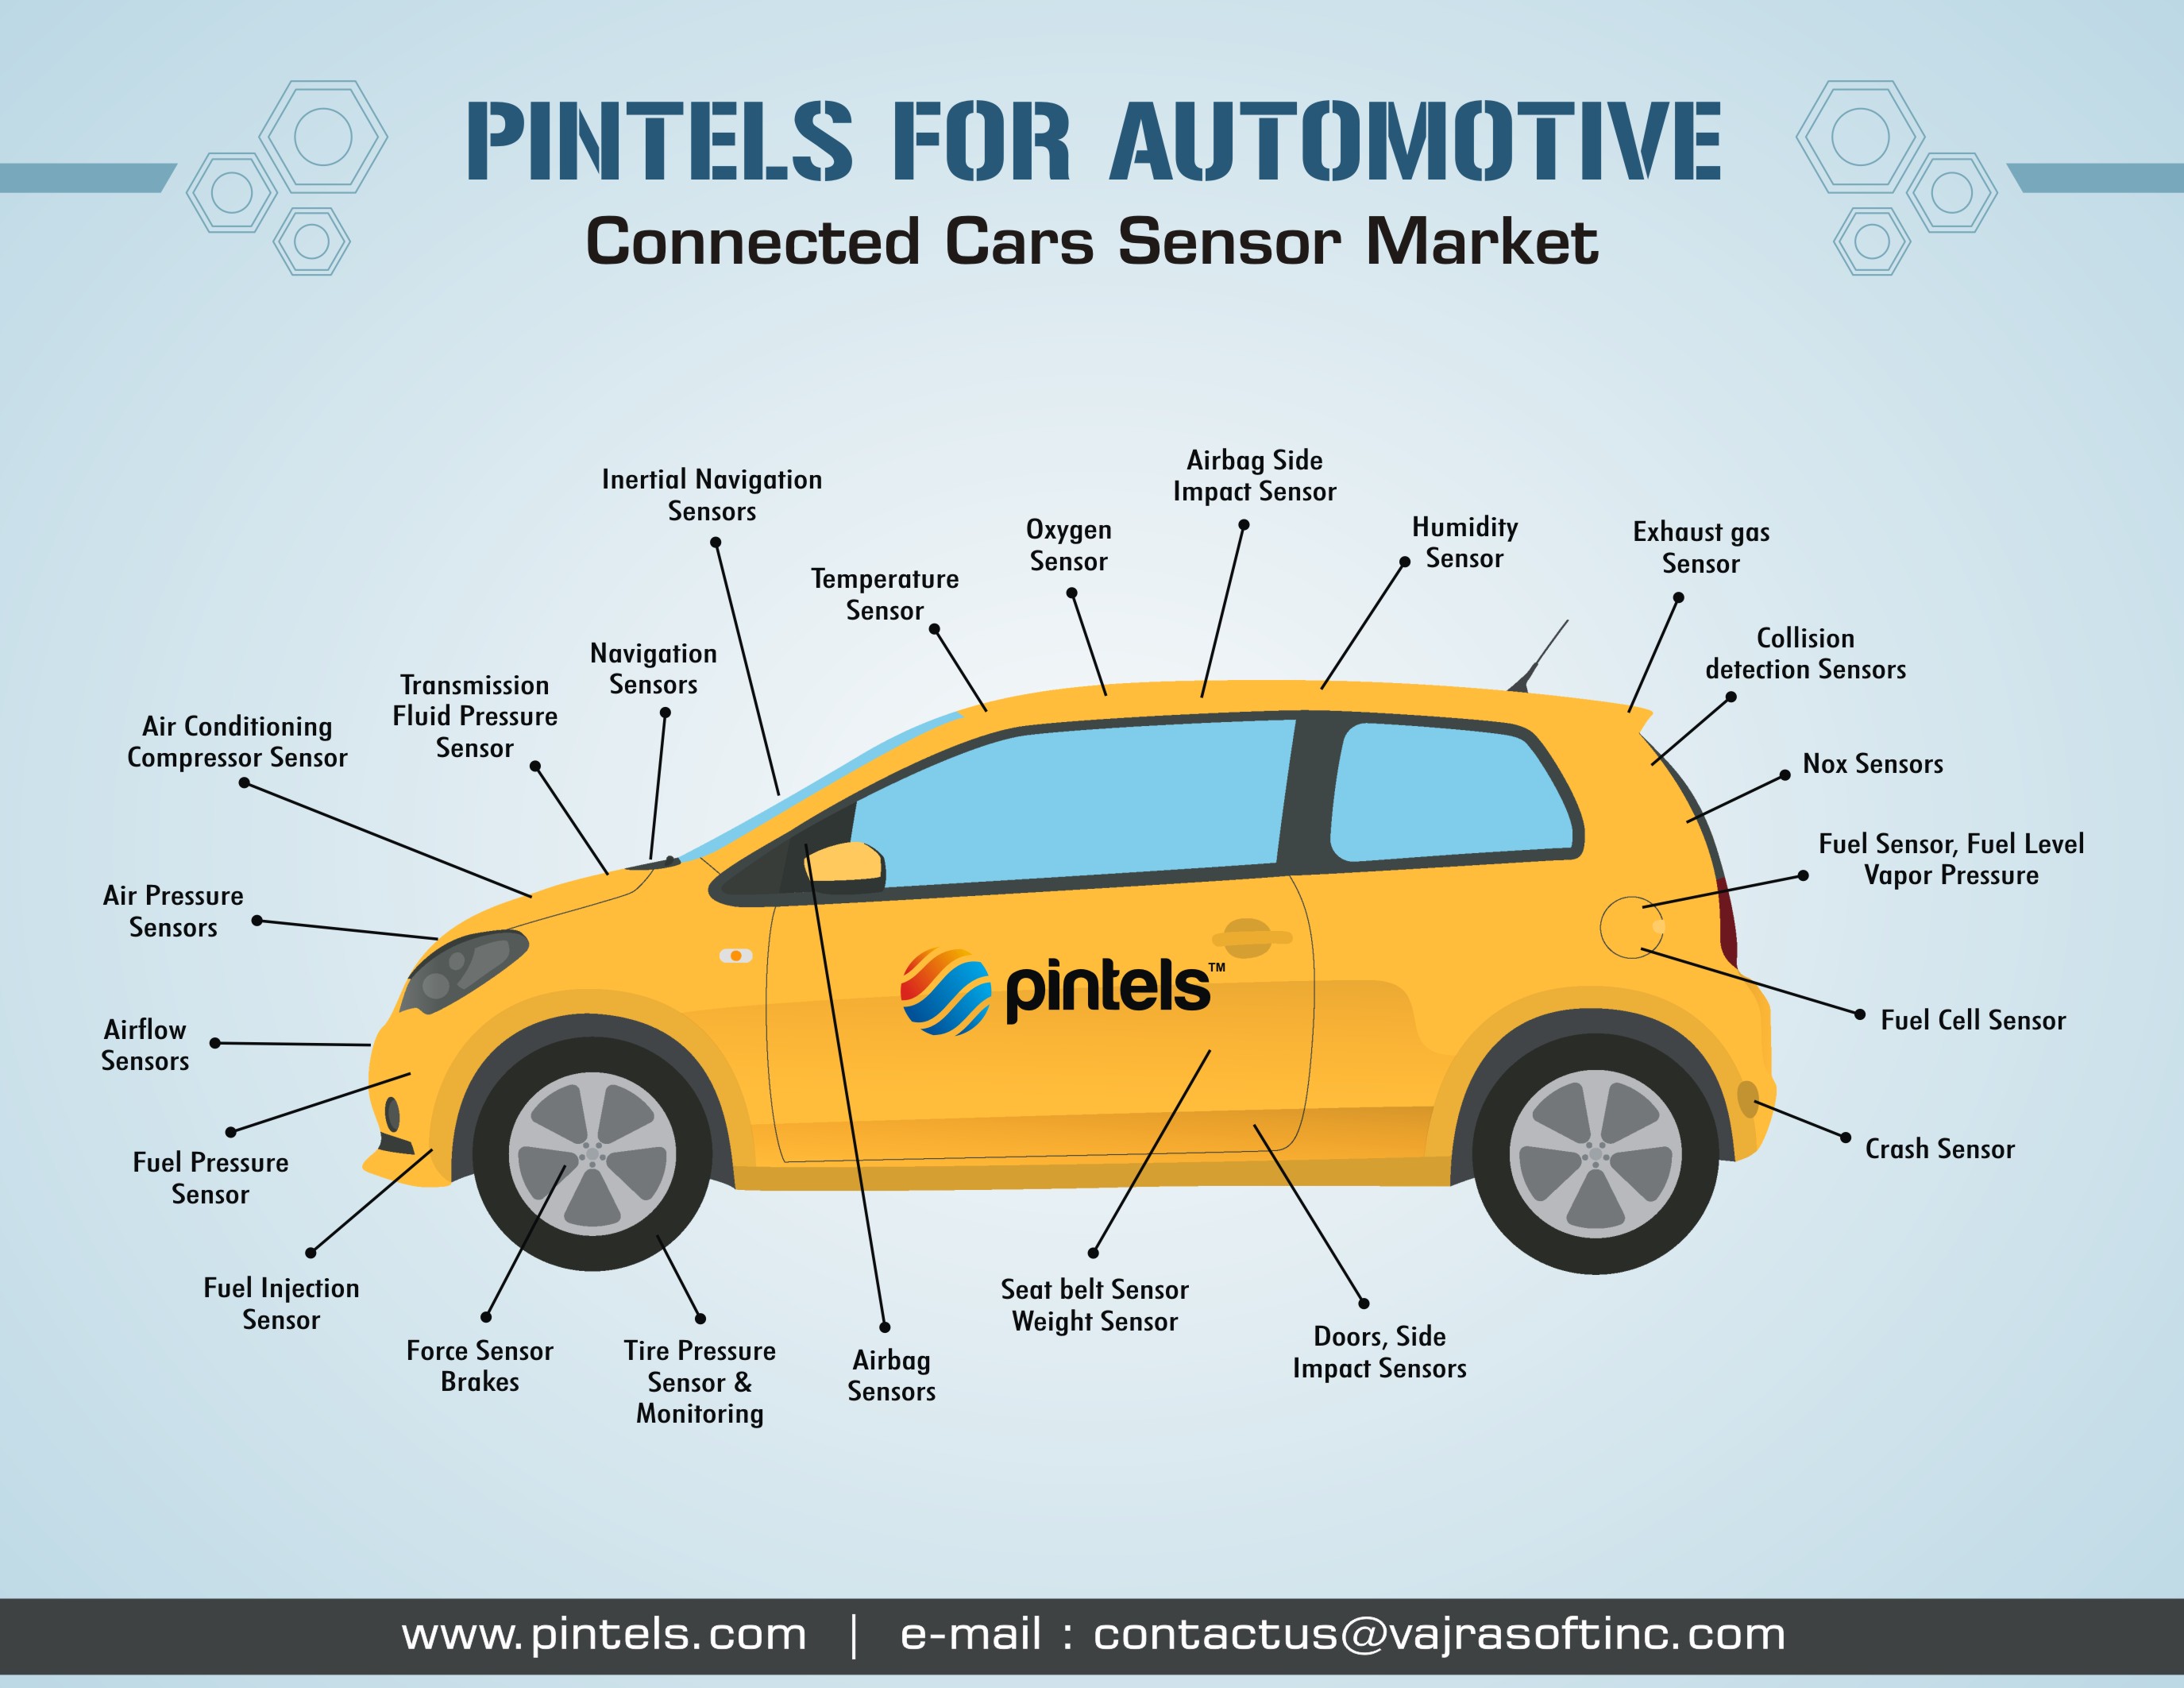 Pintels For Automotive Industry, Connected Car Landscape